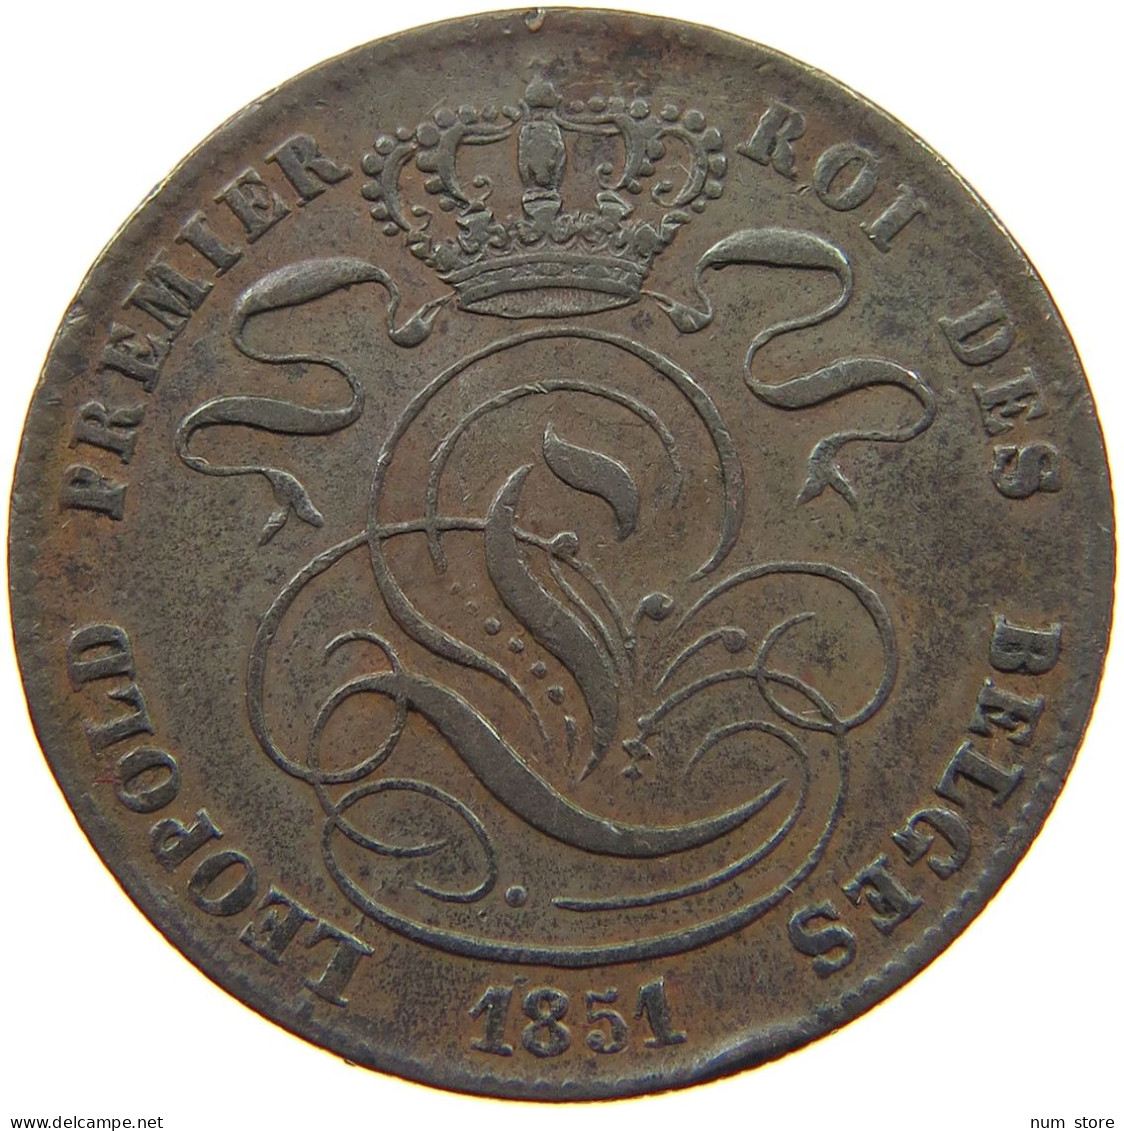 BELGIUM 5 CENTIMES 1851  #t132 0599 - 5 Centimes